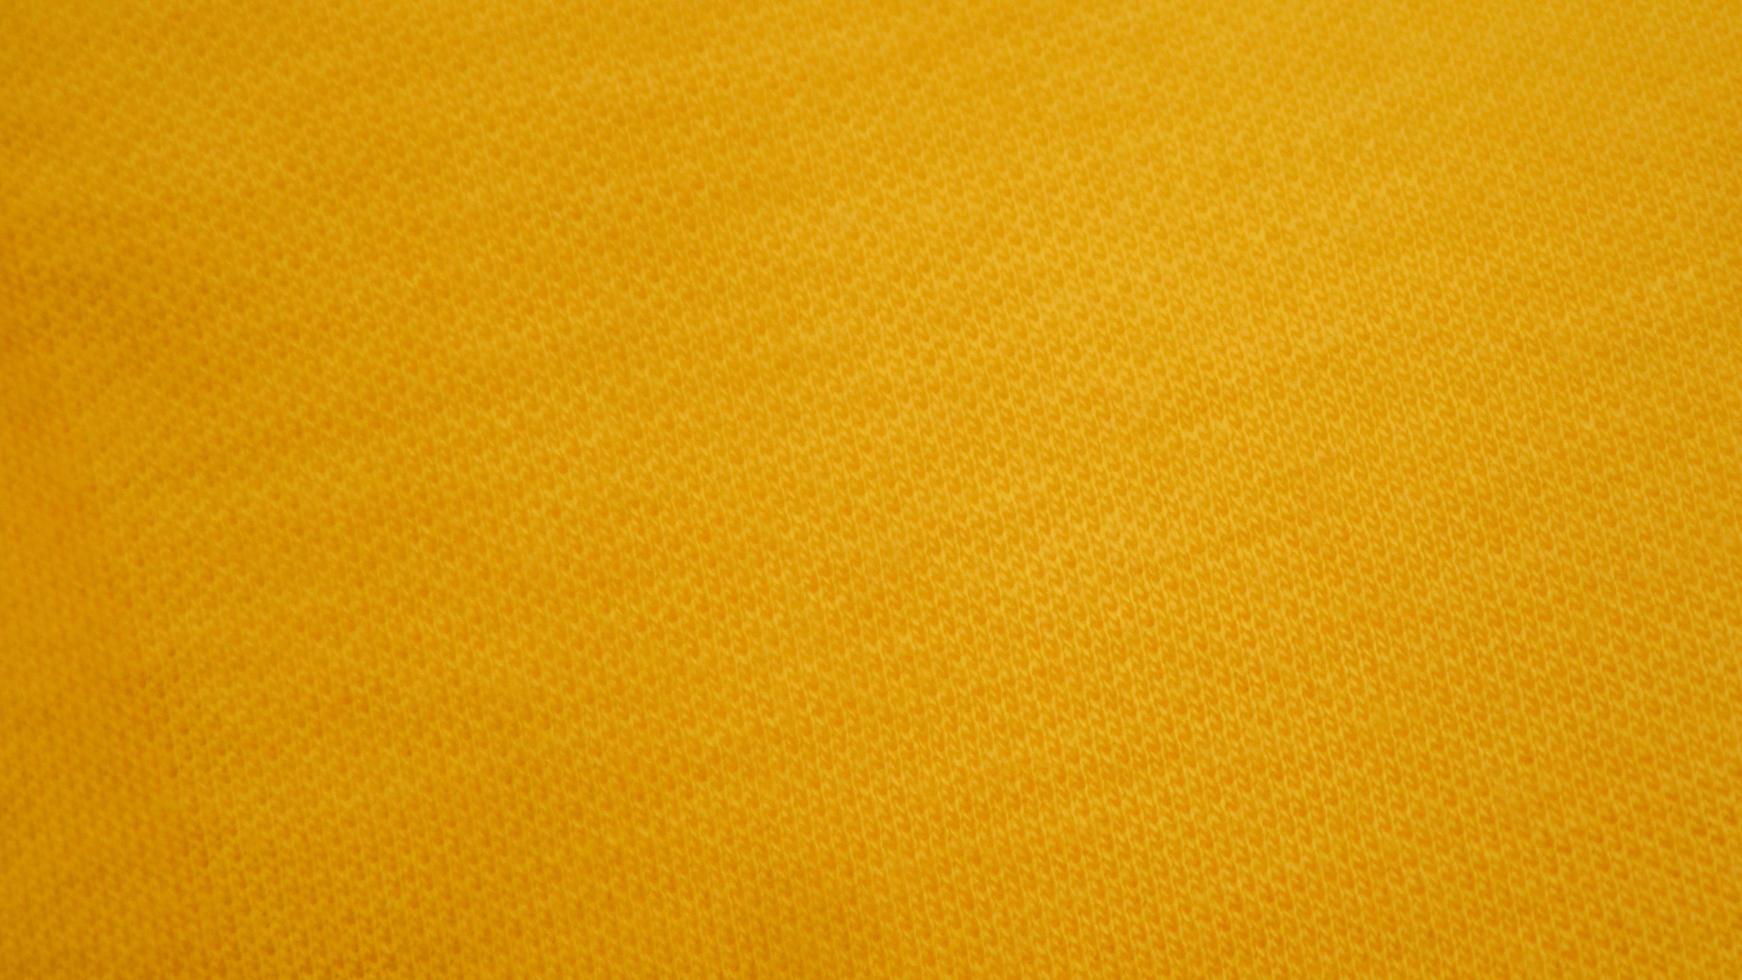 orange cloth texture as background photo